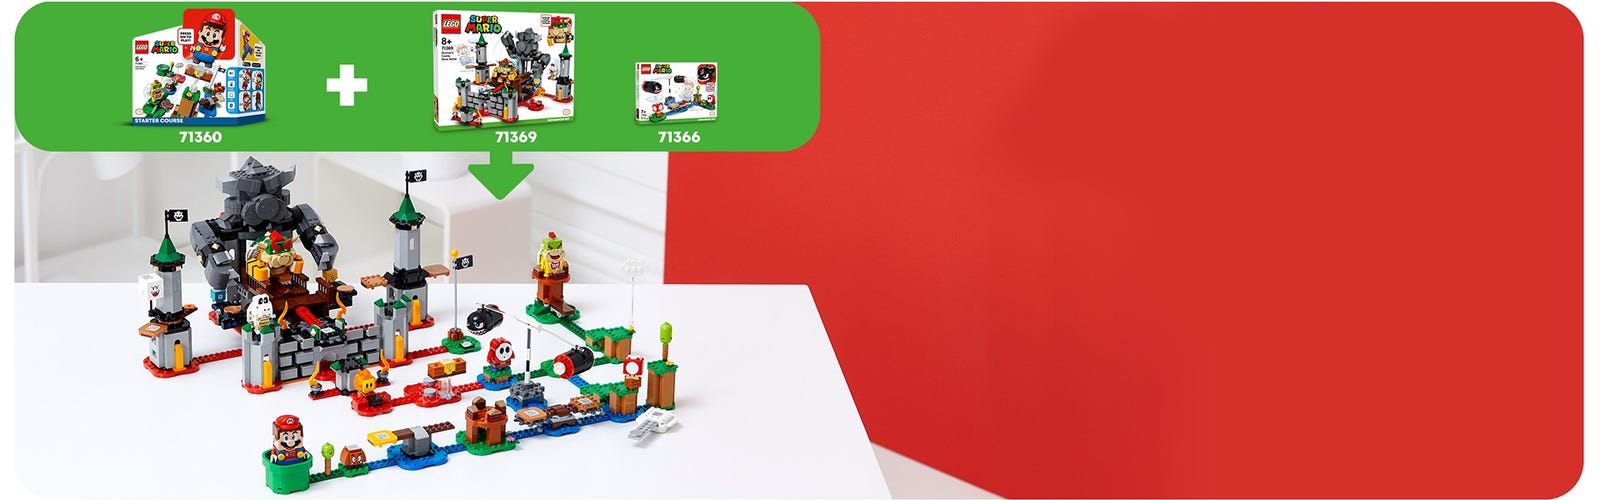 LEGO Super Mario Adventures with Mario Starter Course 71360 6288910 - Best  Buy